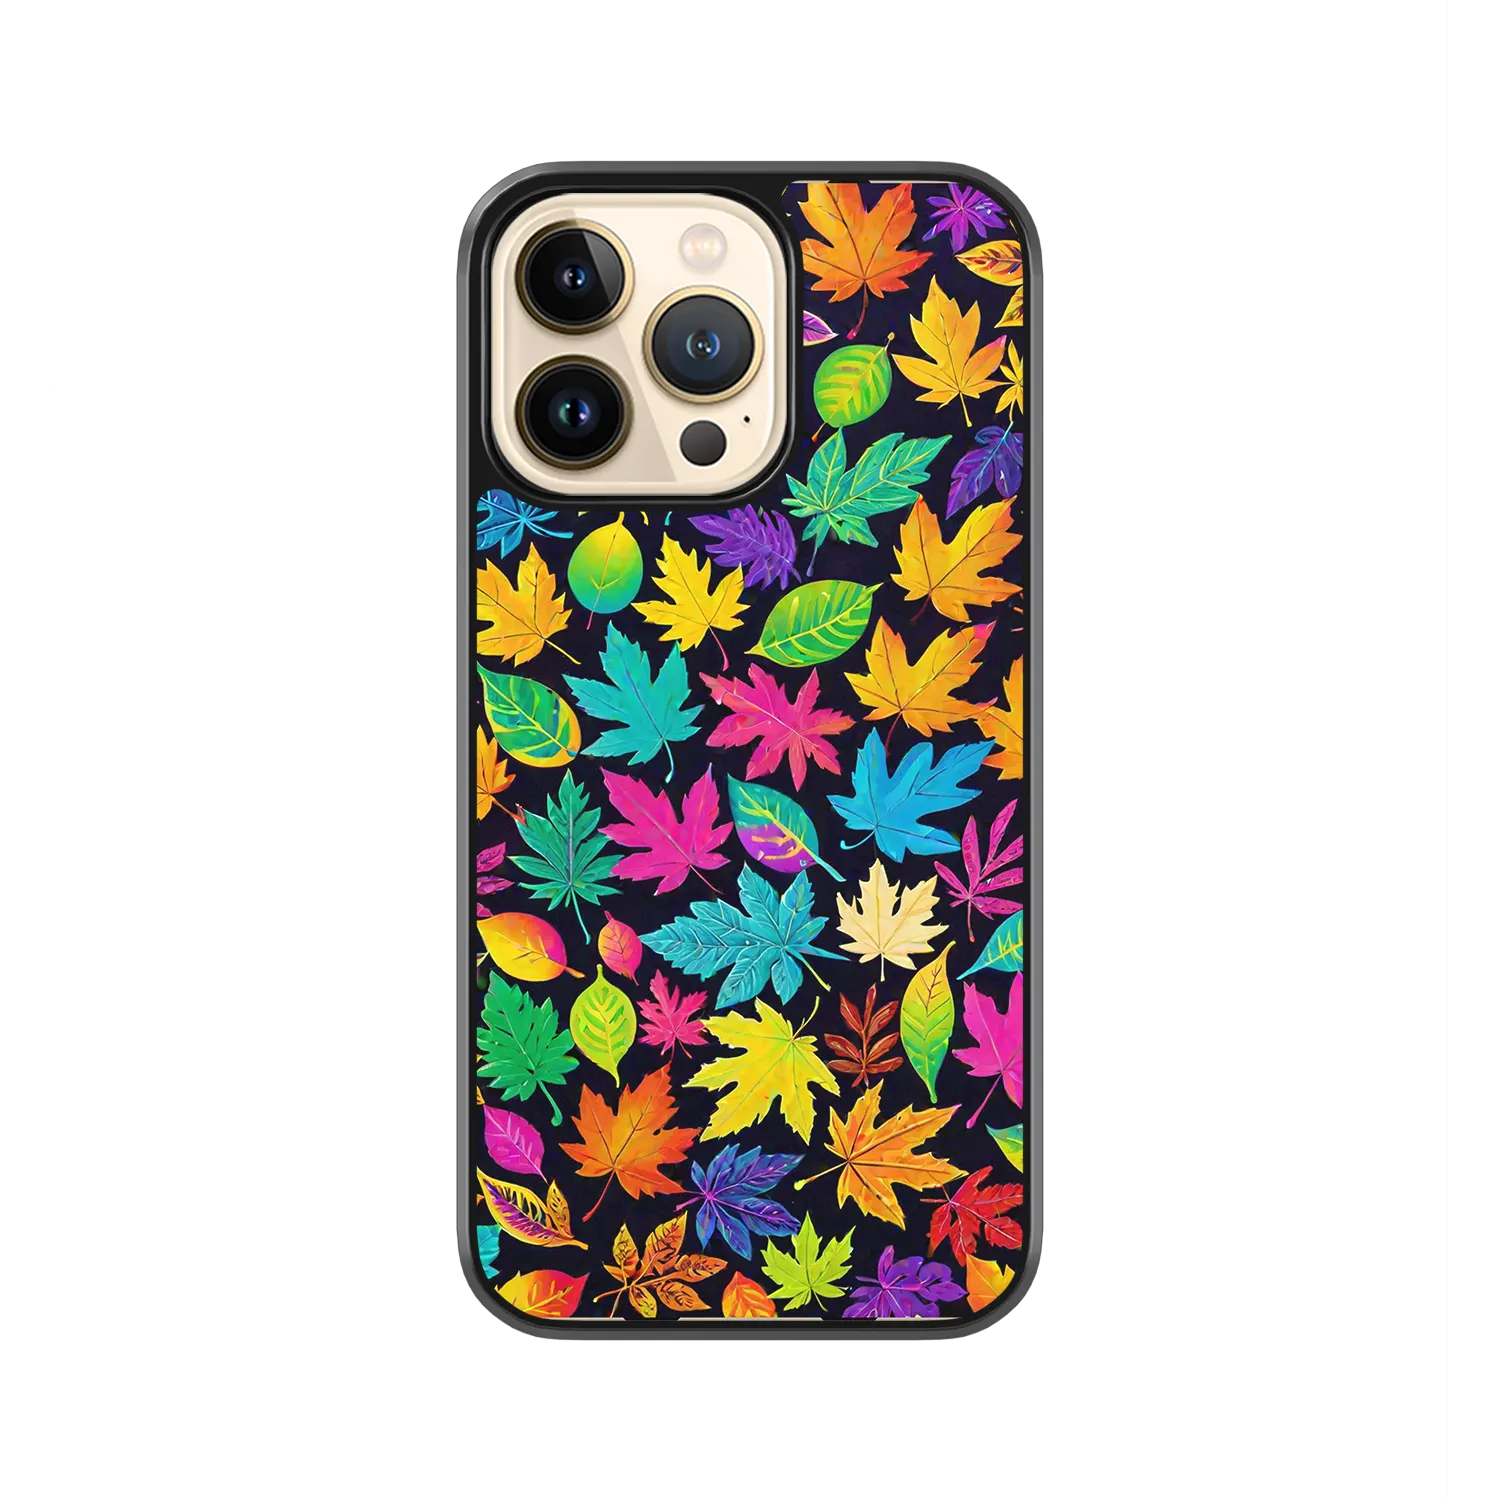 Autumn Hues iphone 11 pro Max case